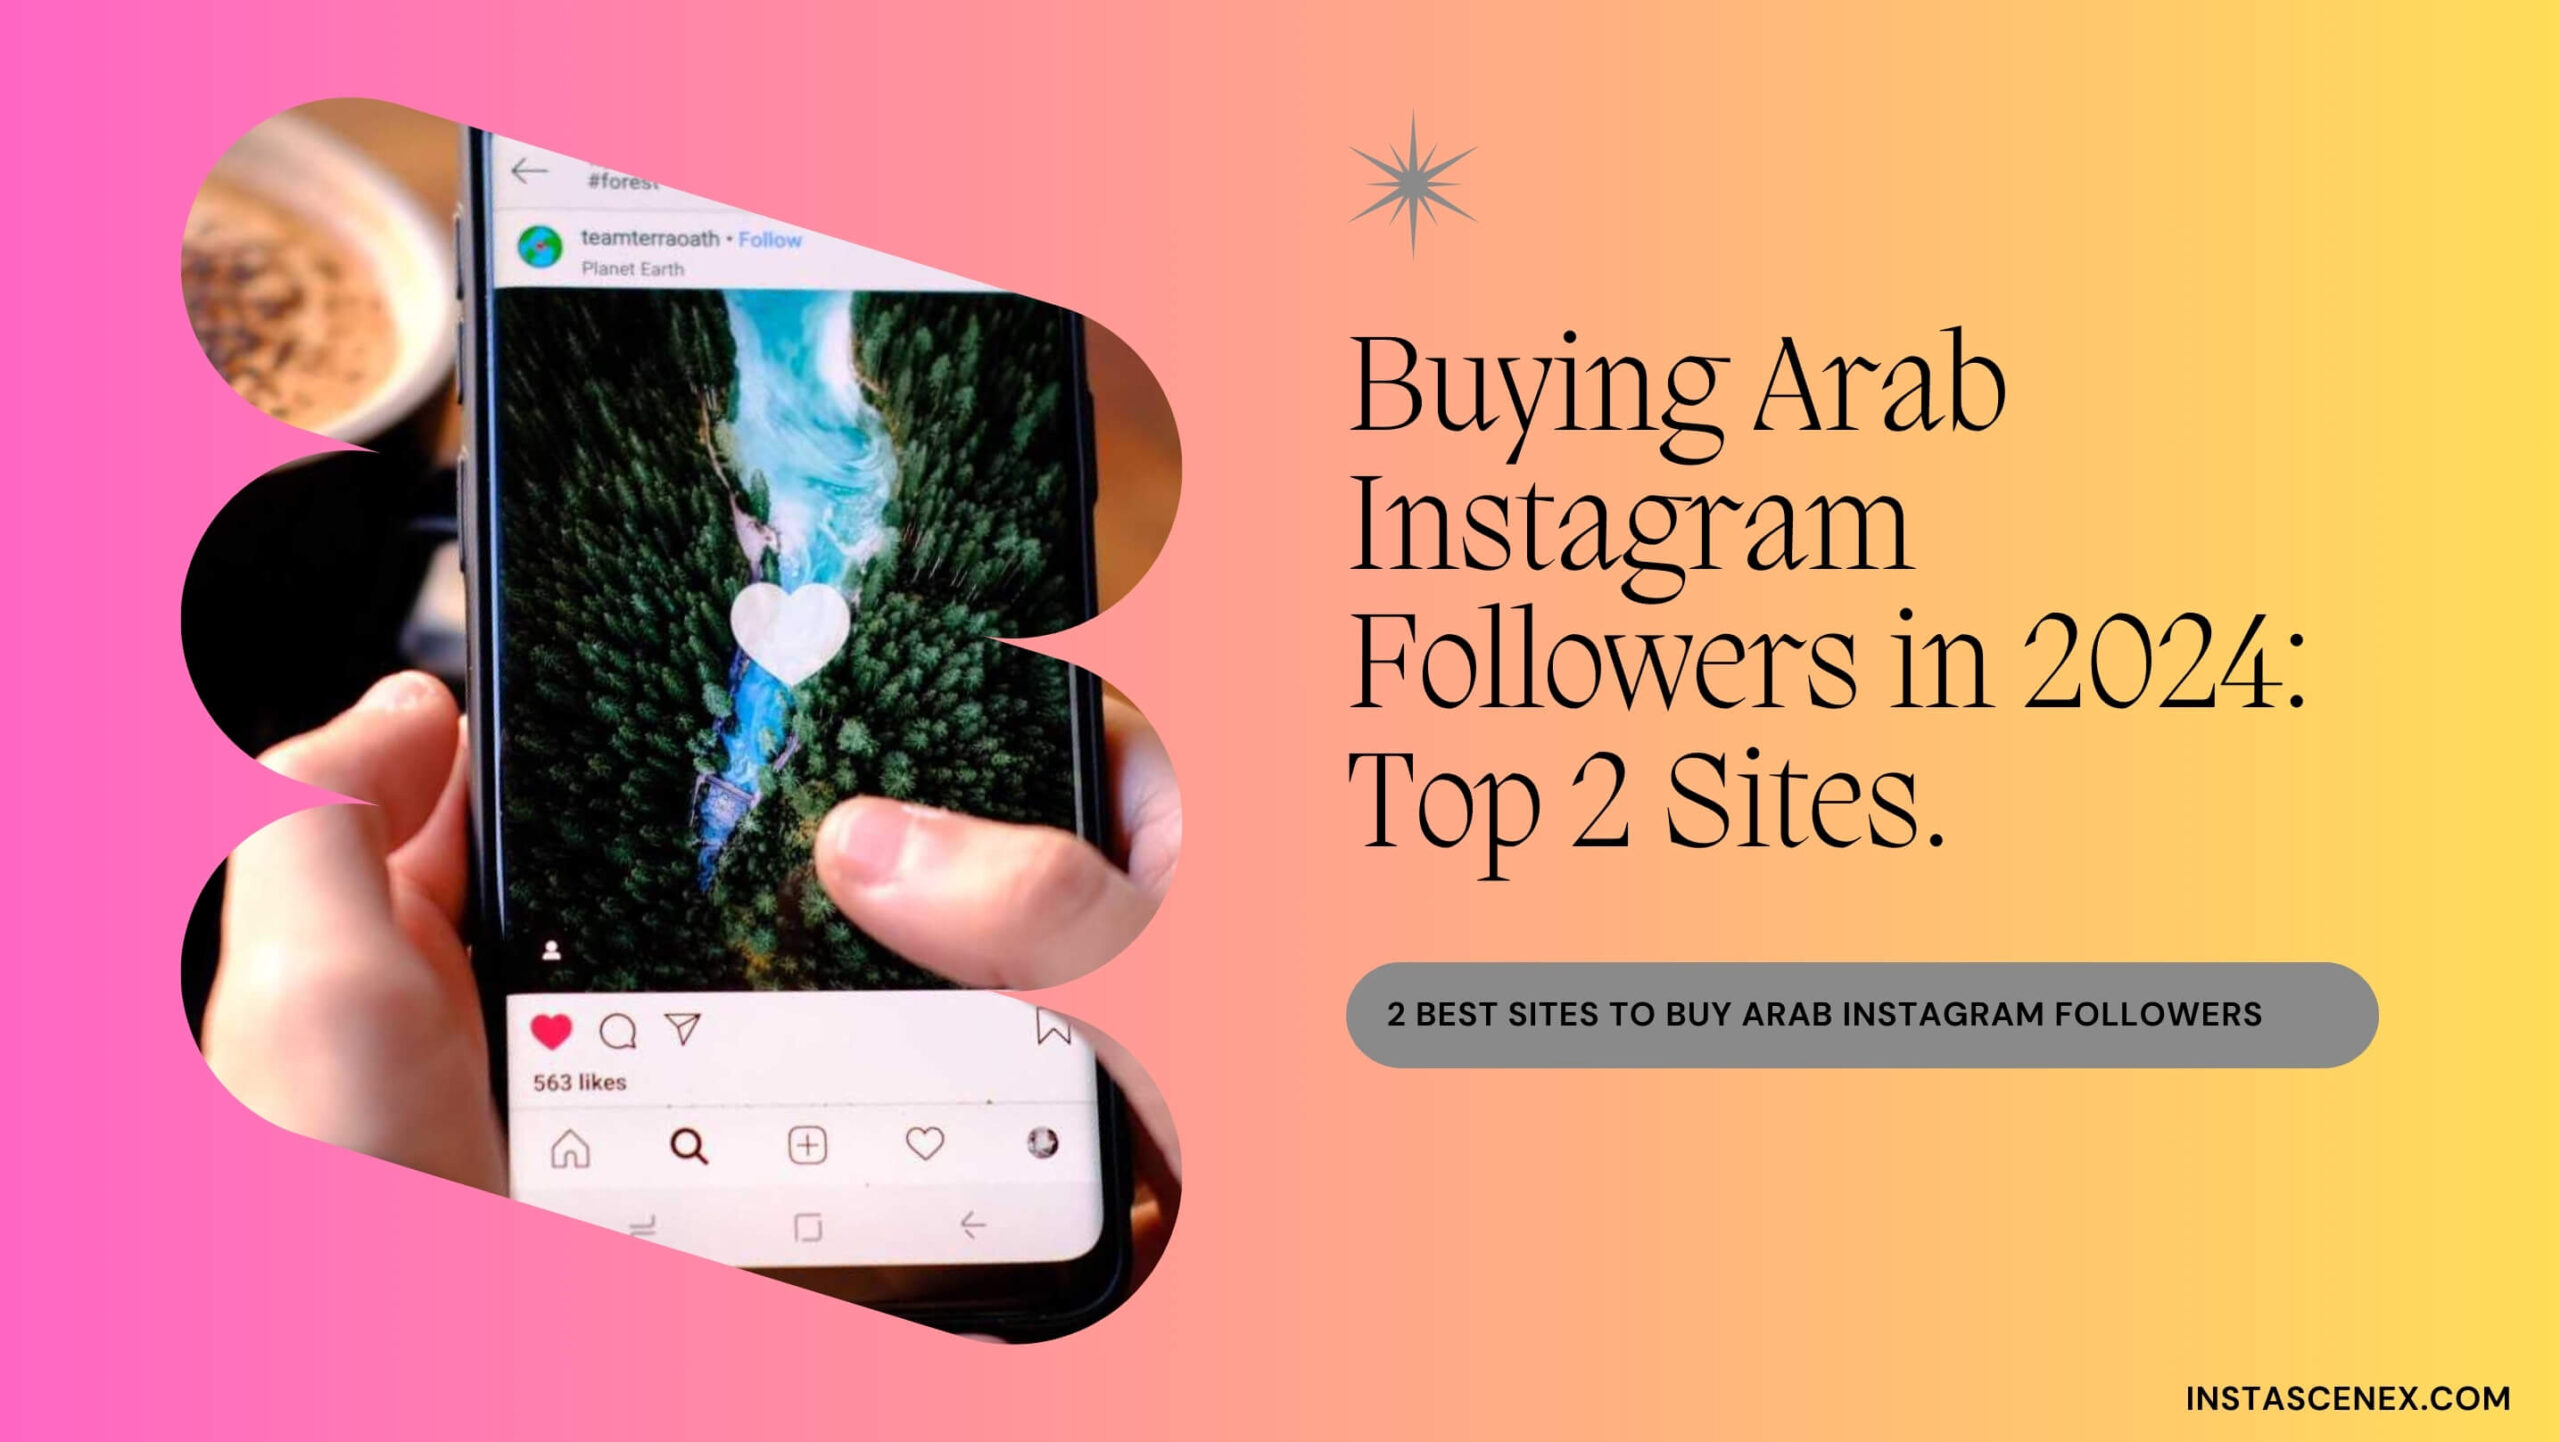 2 Best Sites To Buy Arab Instagram Followers in 2024